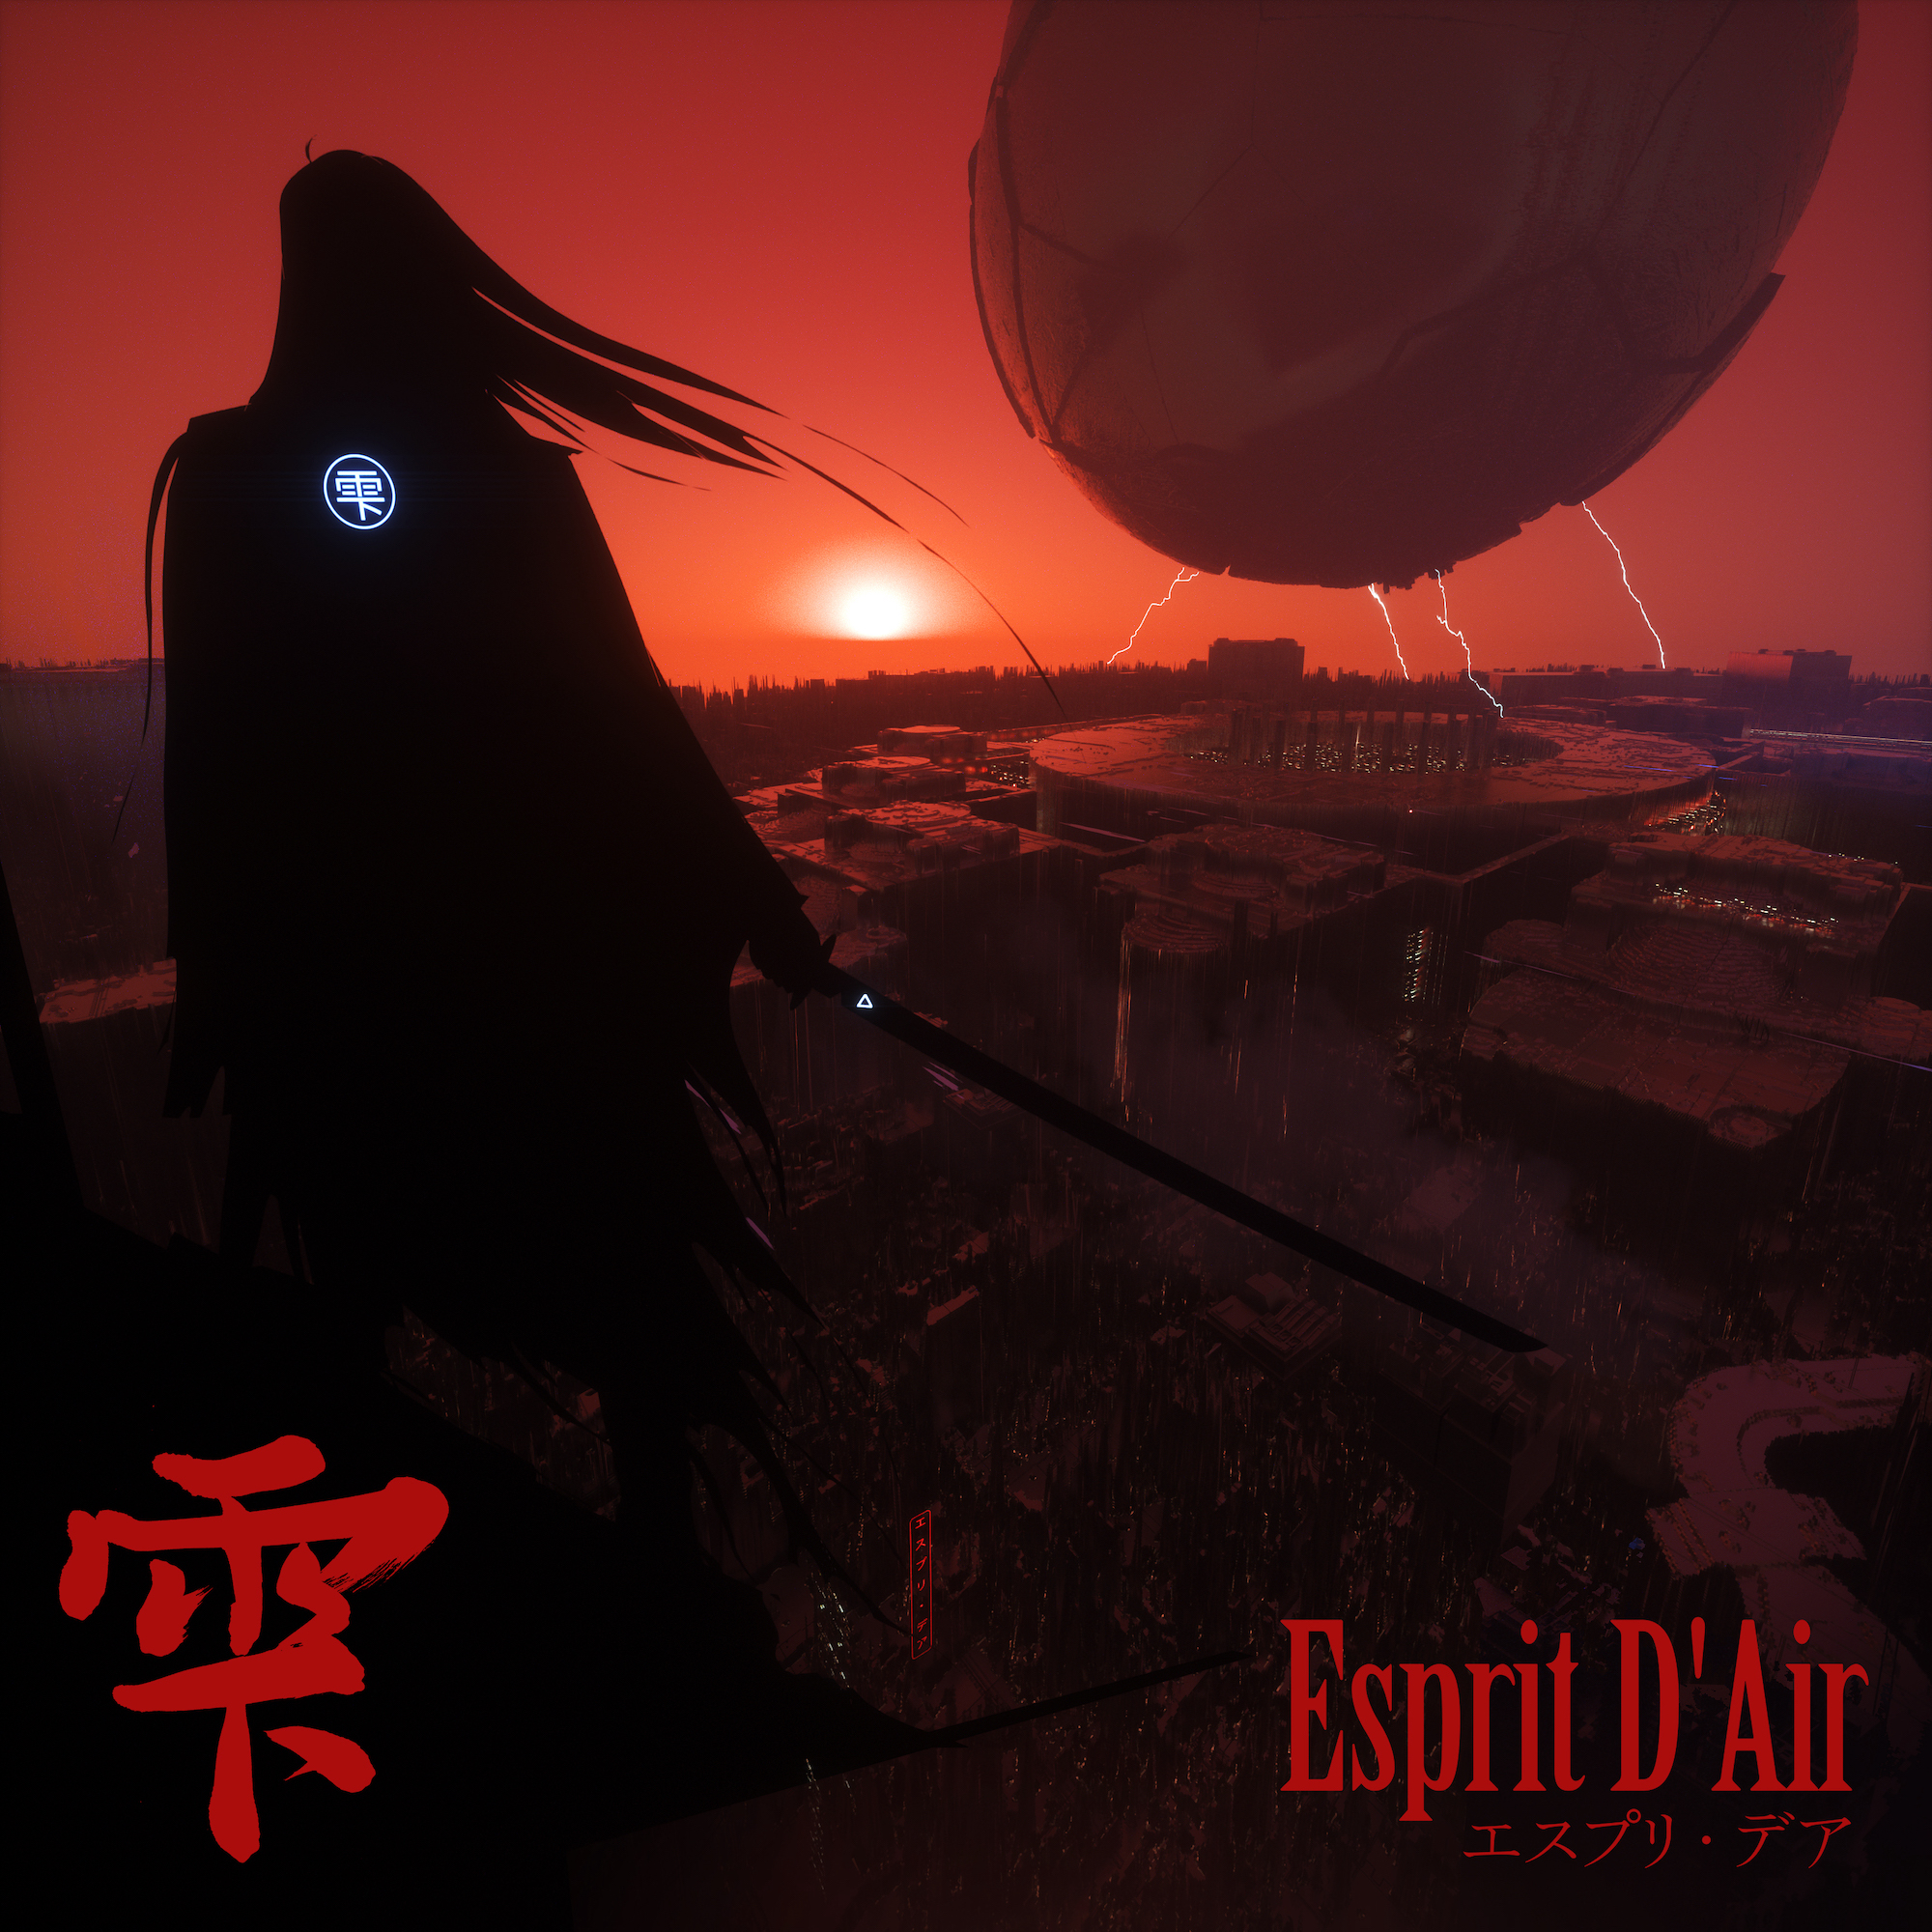 LISTEN: “雫” by Esprit D’Air featuring Misstiq